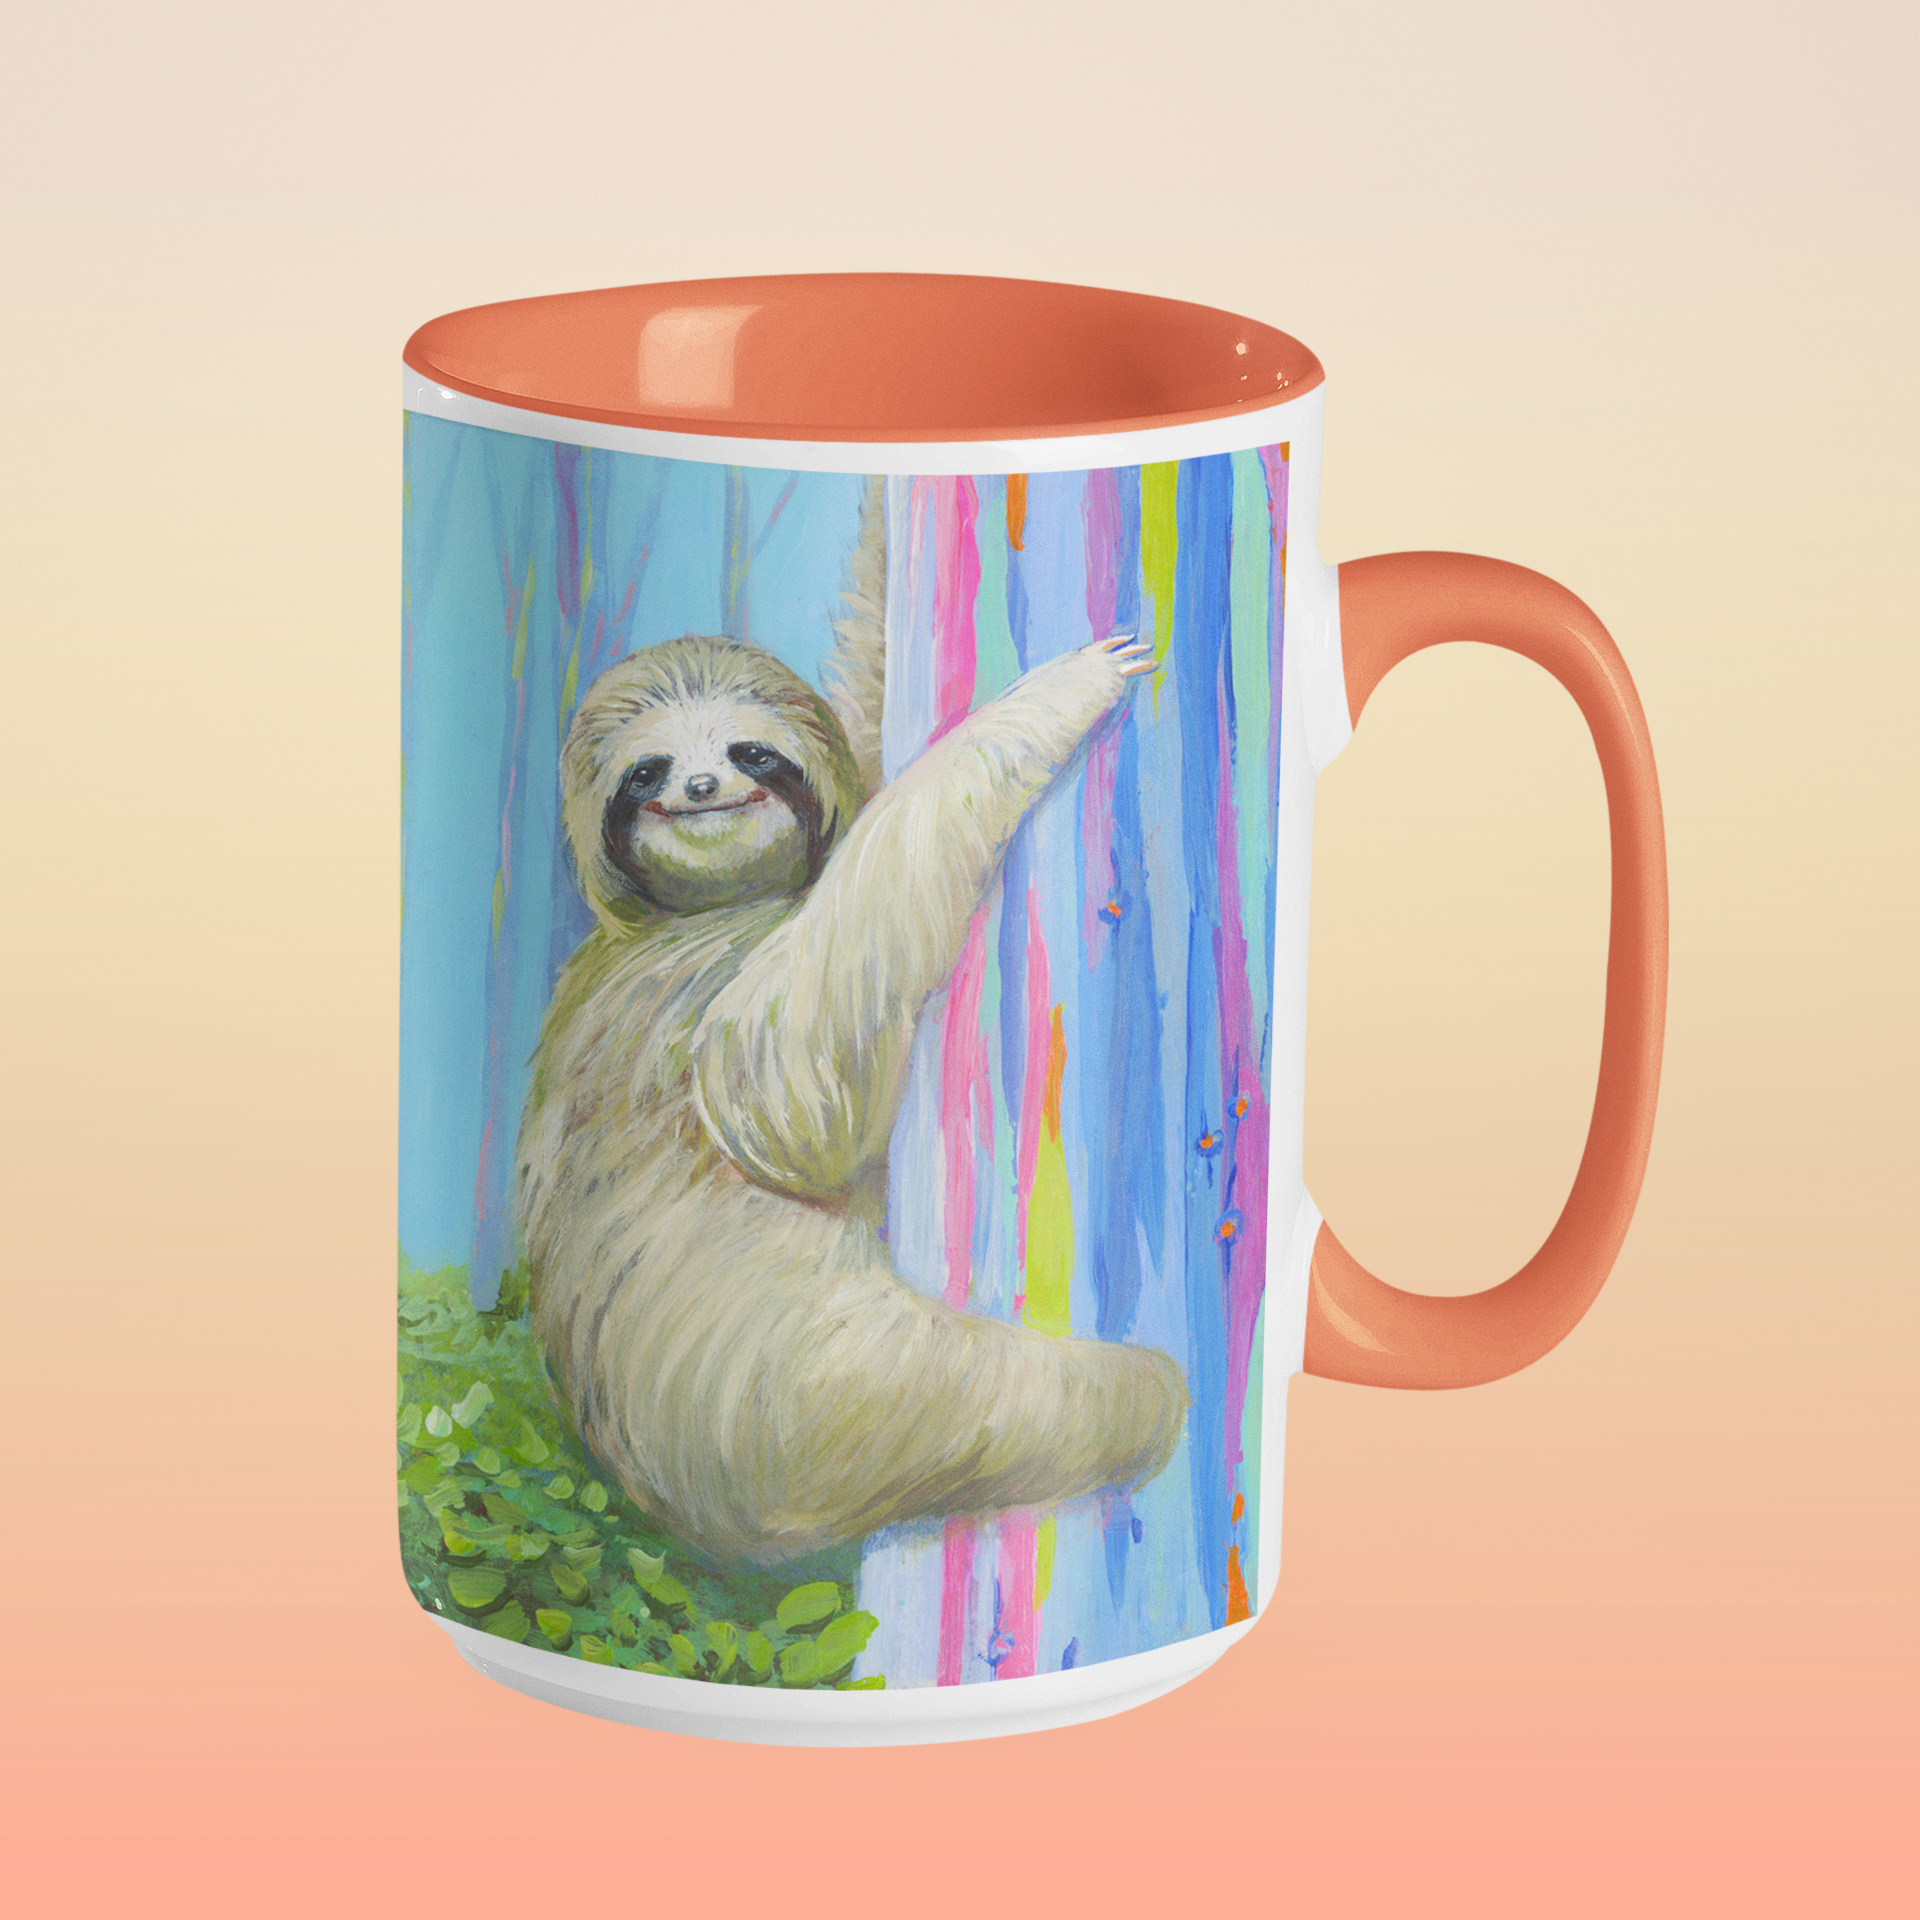 Sloth “Slow Ride” Ceramic Mug